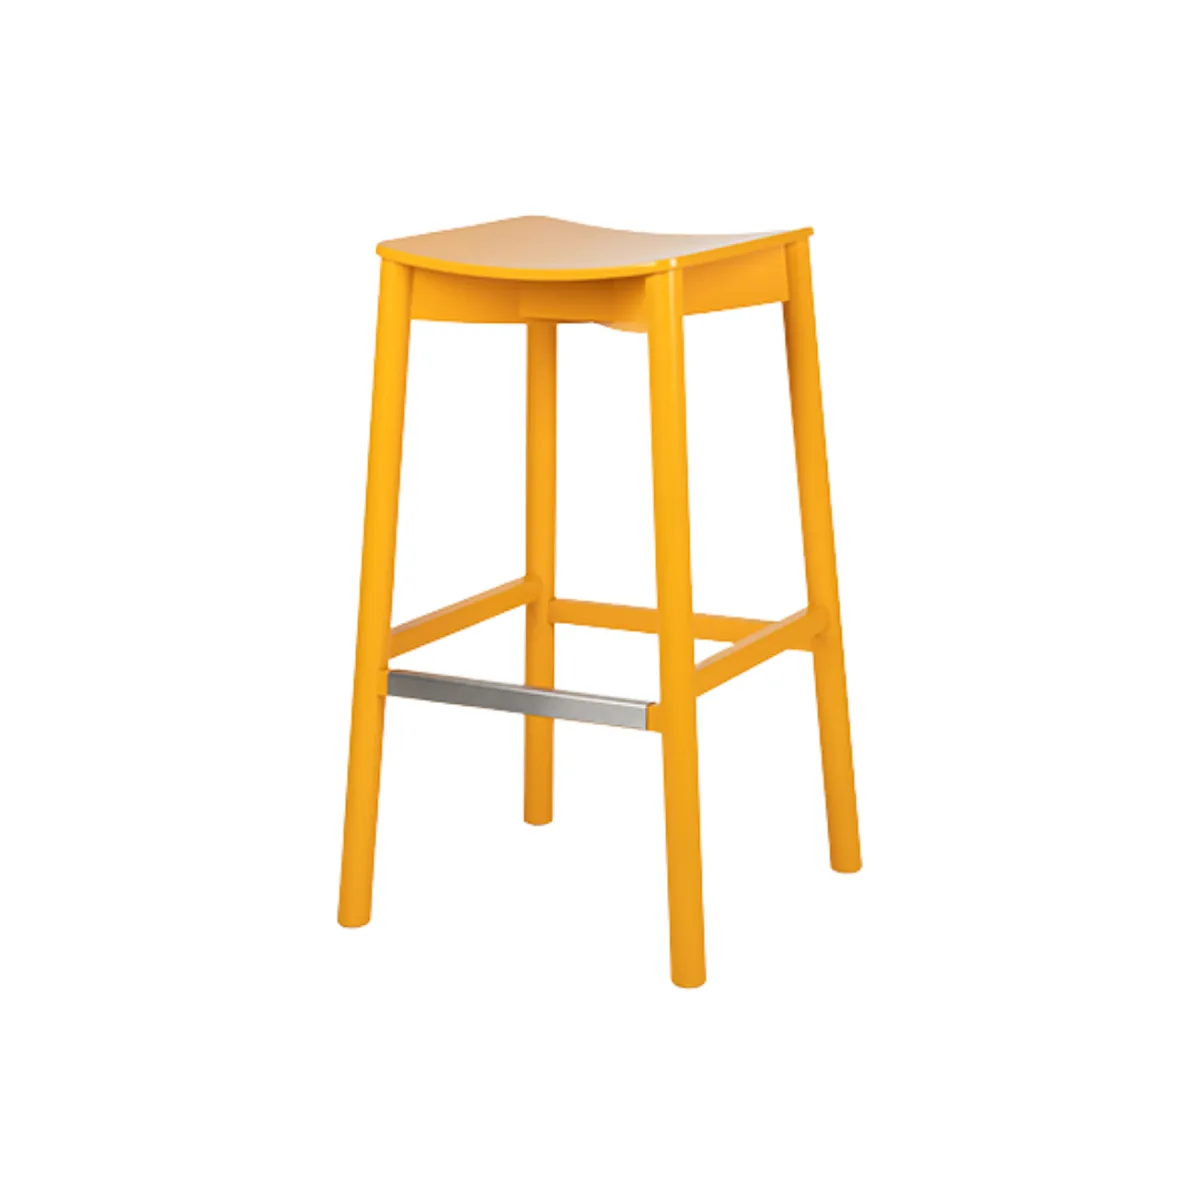 Perch high stool 1